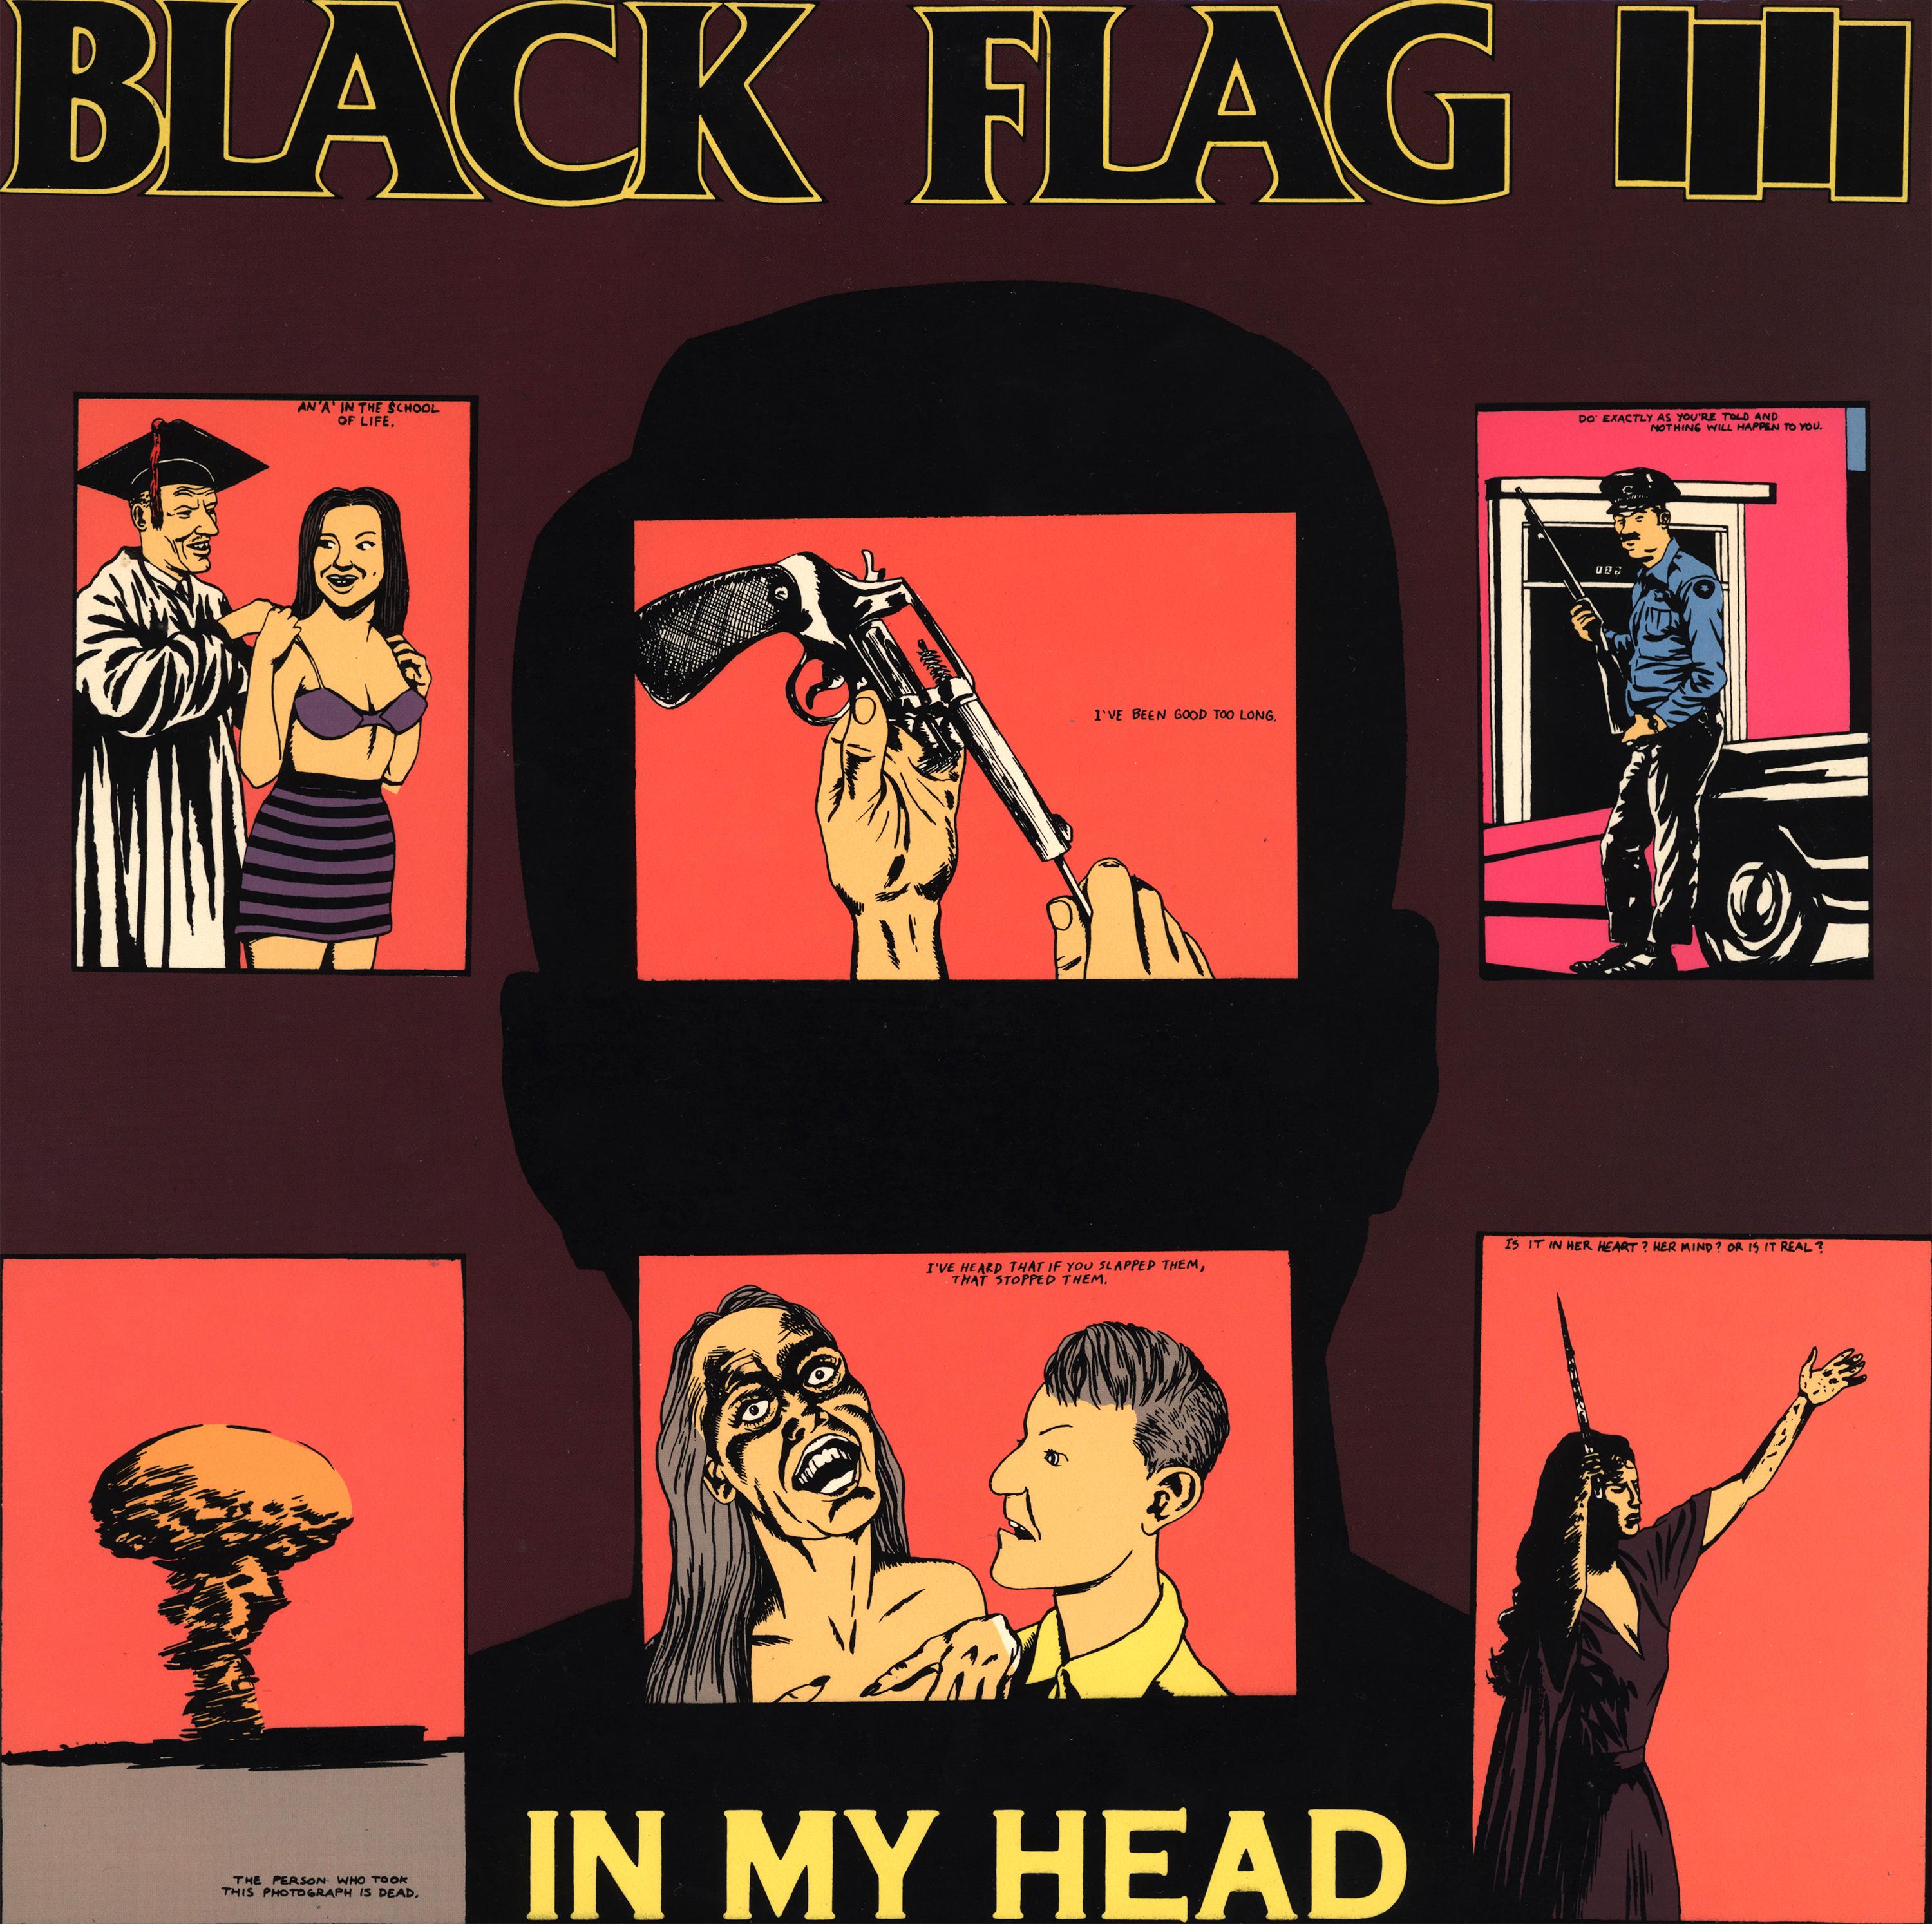 Seltener original Raymond Pettibon Plattencover-Art-Set von 4 (Pettibon-Schwarze Flagge) im Angebot 4